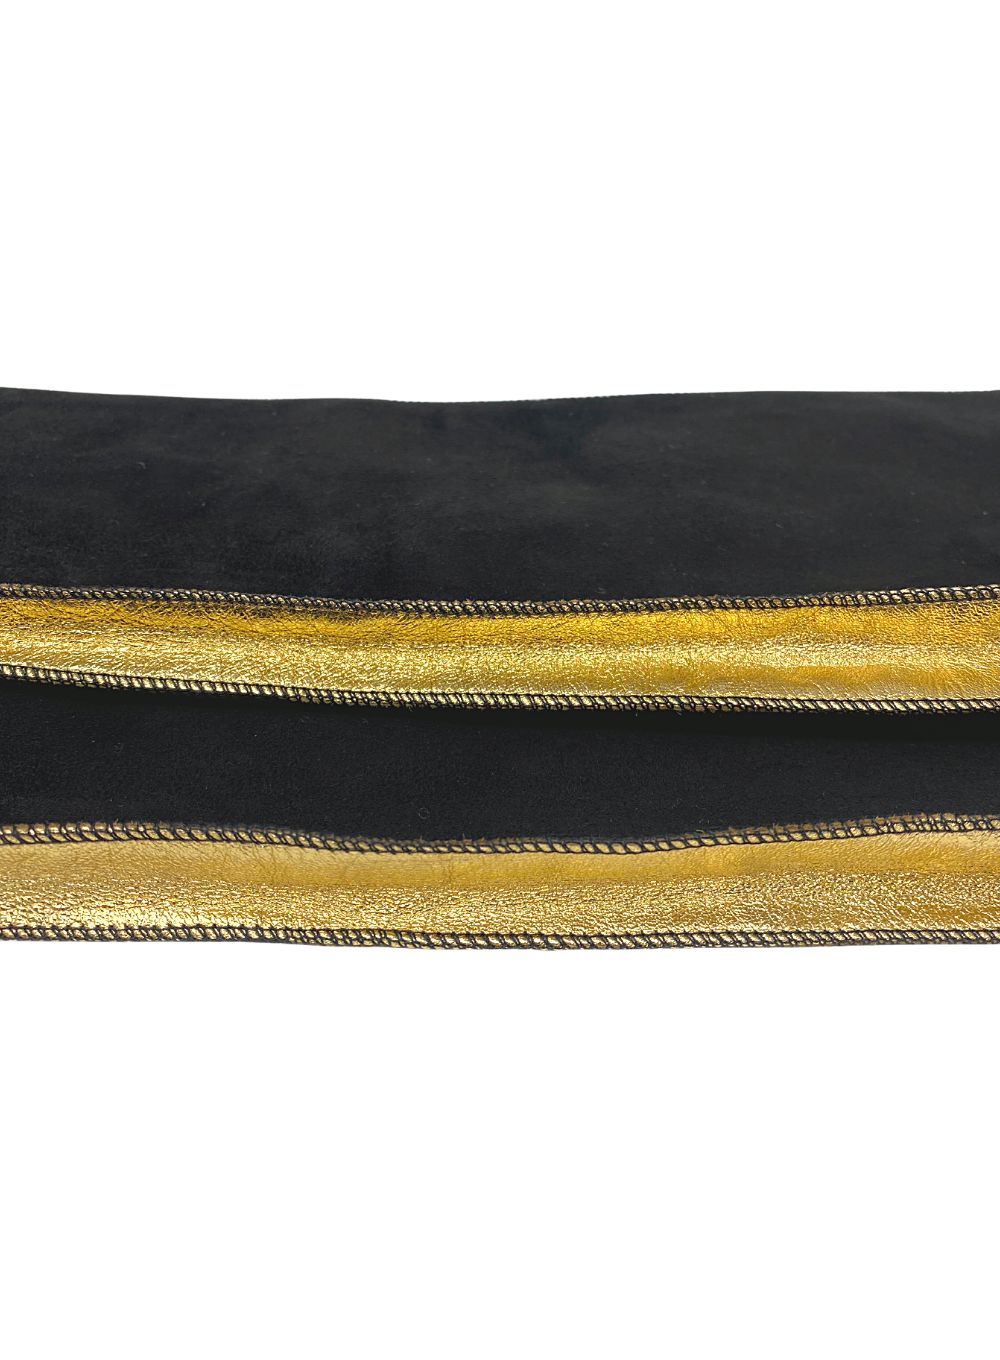 PORTOLANO | Black & Gold Suede Gloves